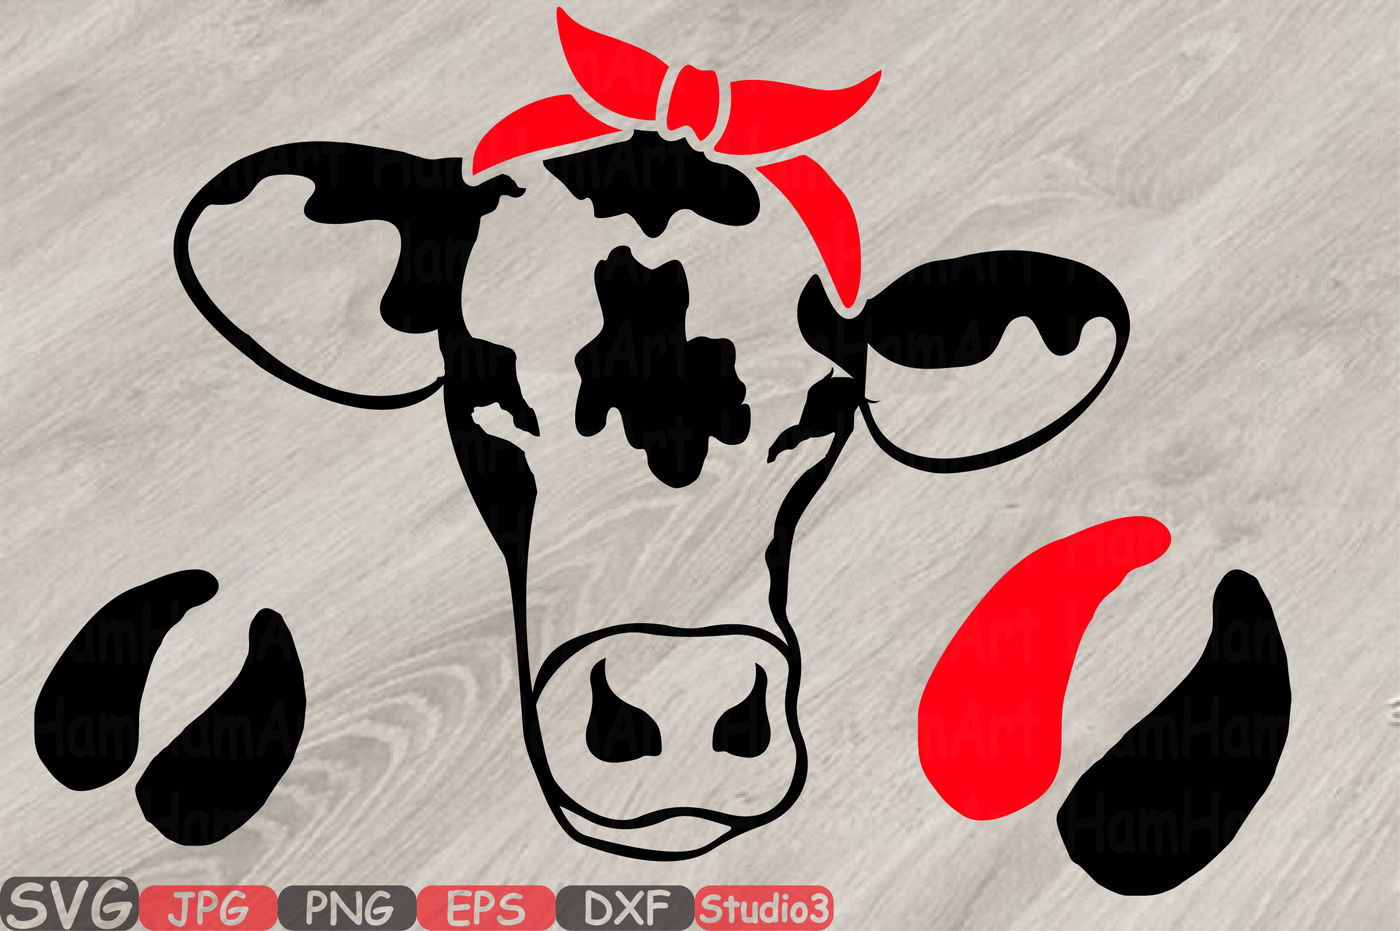 Cow Head Whit Bandana Silhouette Svg Cowboy Western Farm Milk 775s By Hamhamart Thehungryjpeg Com